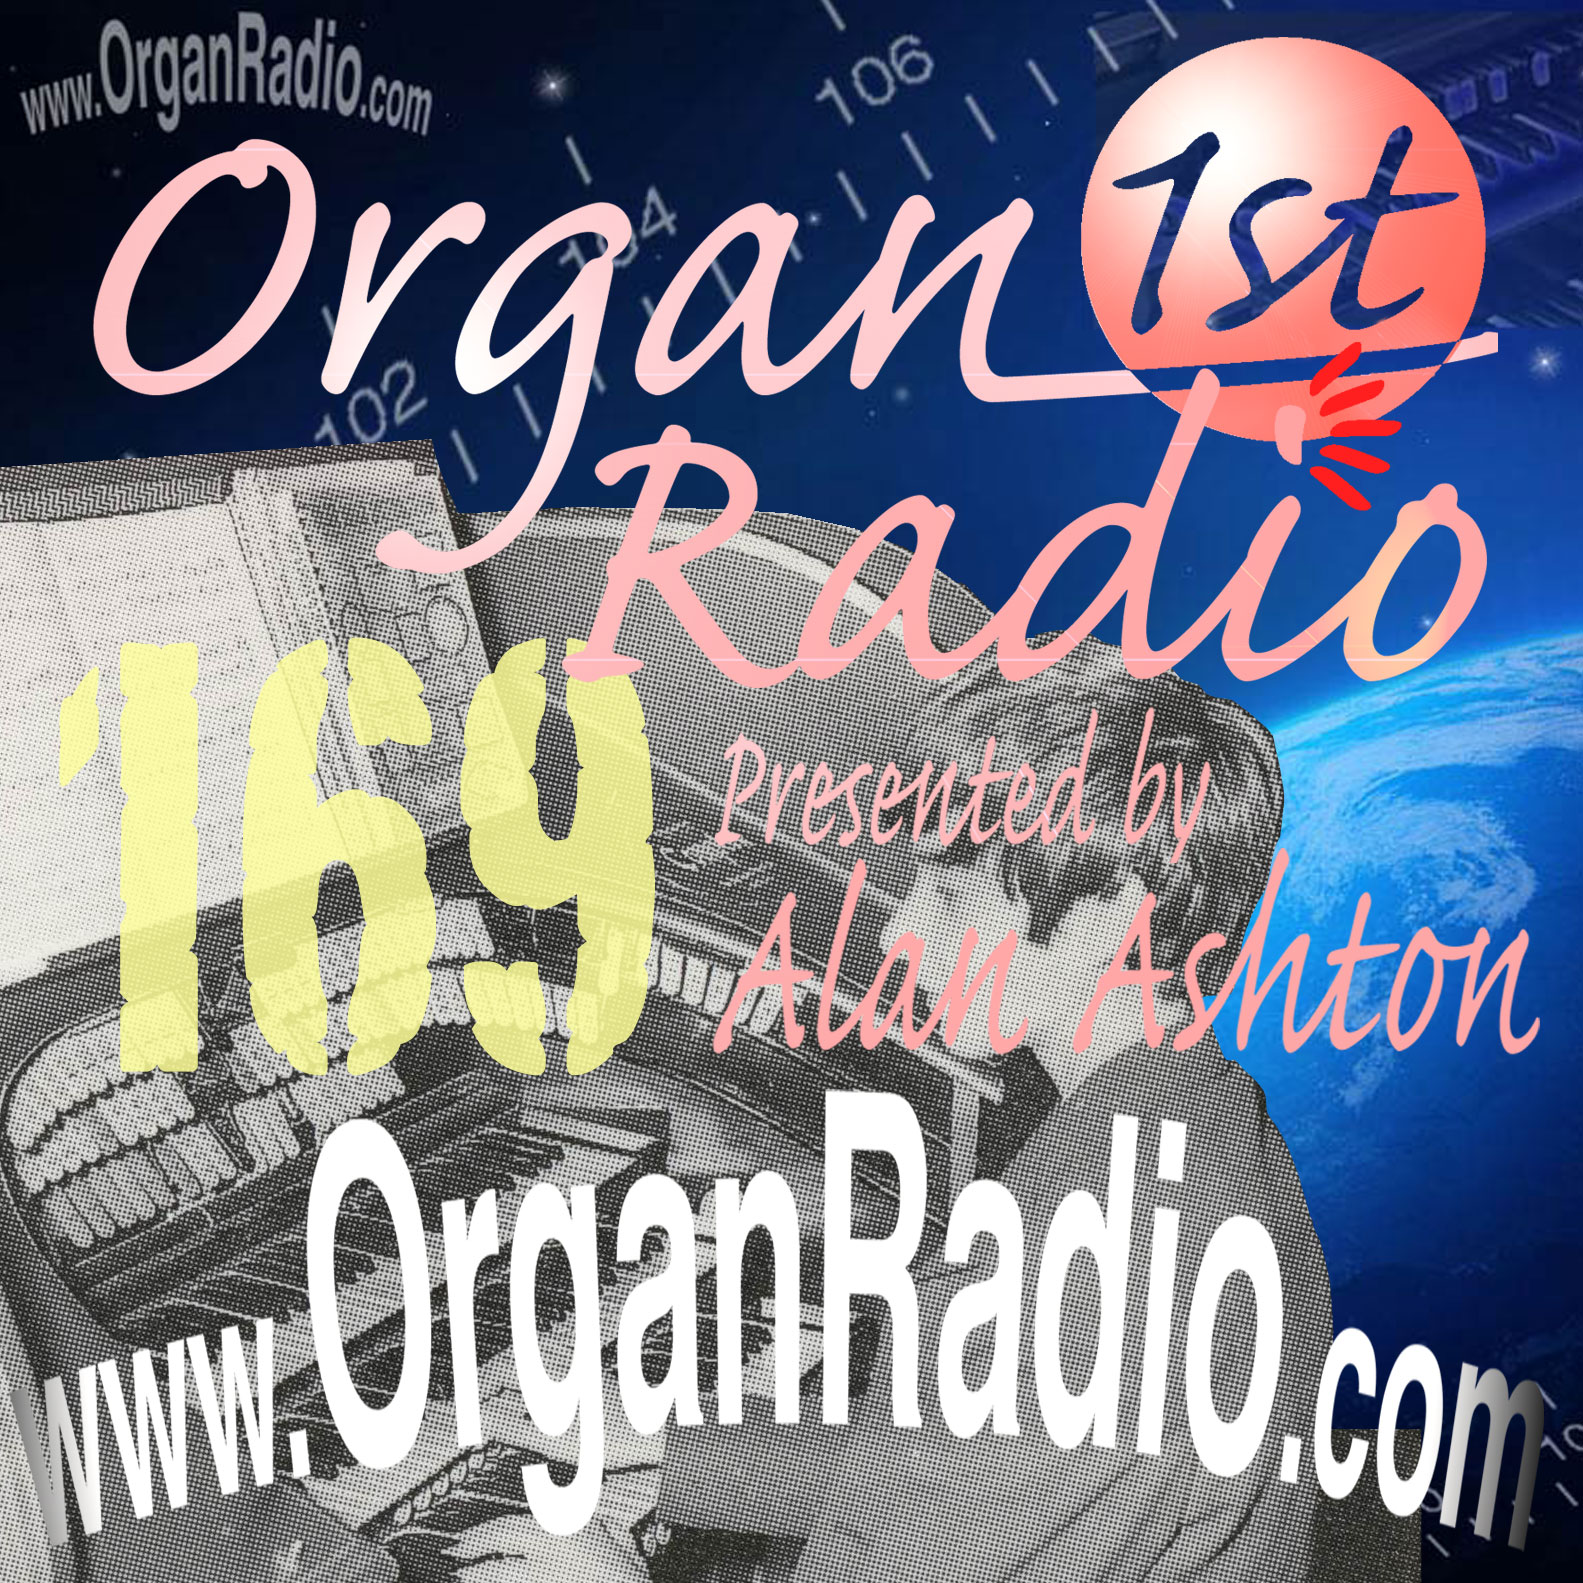 ORGAN1st - Organ Radio Podcast - Show 169